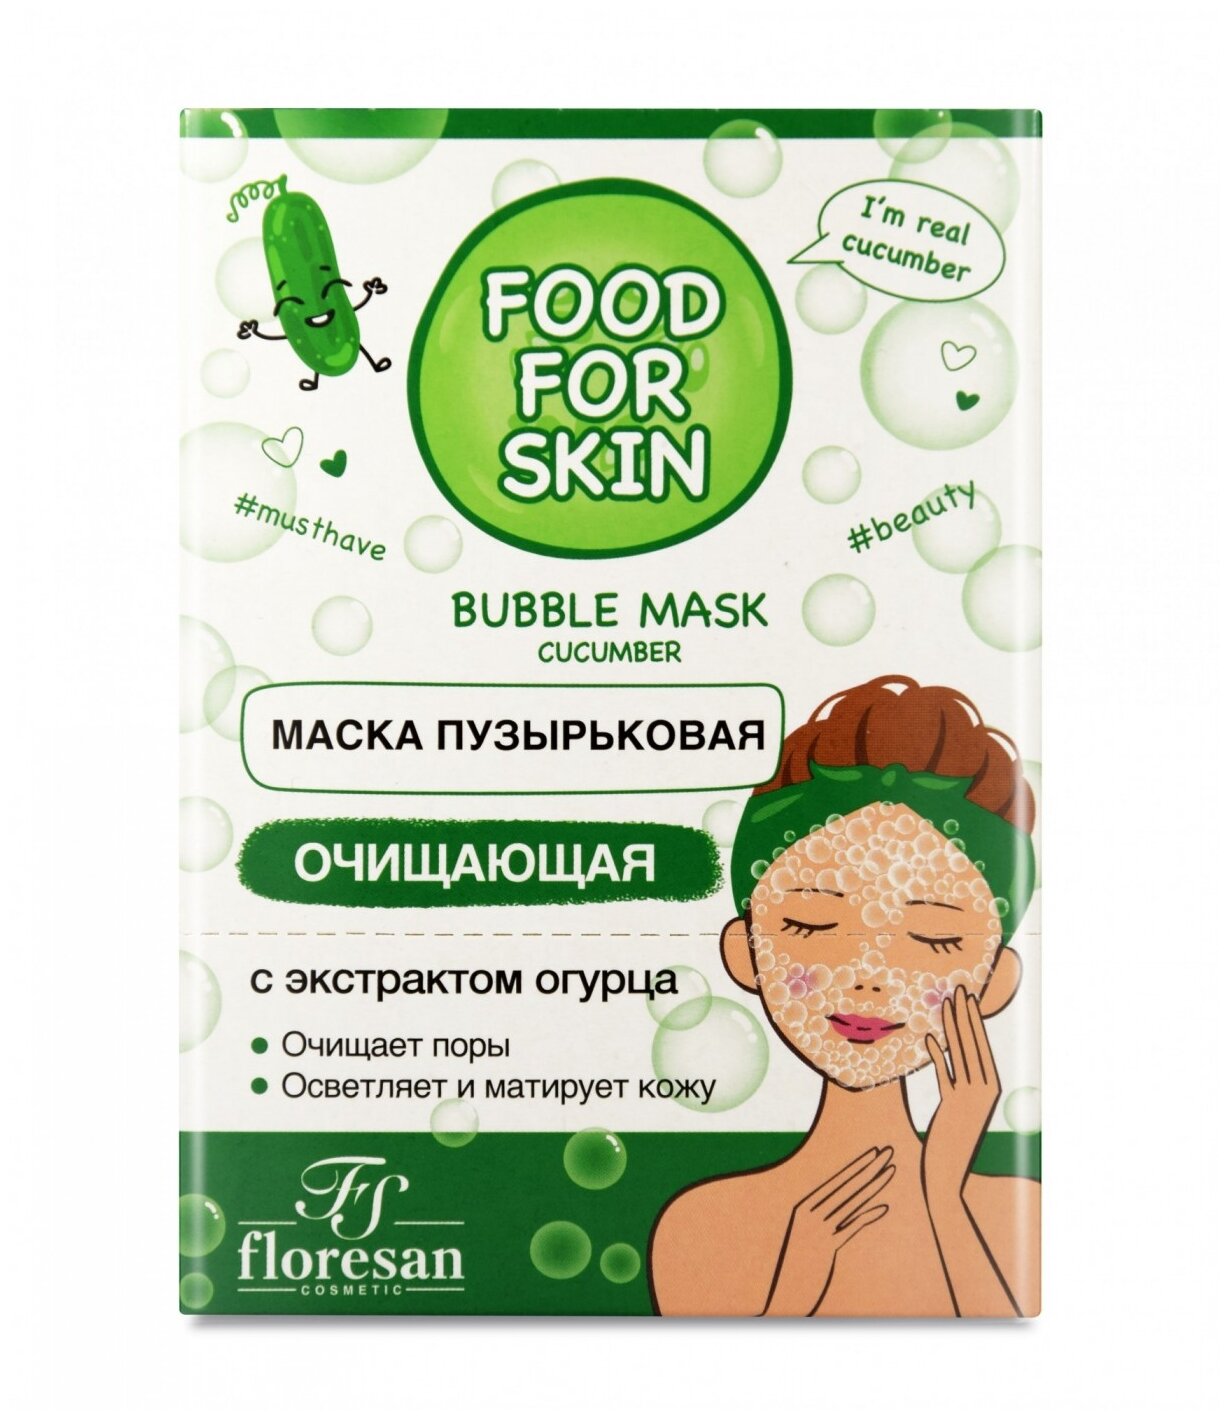 Floresan FOOD FOR SKIN CUCUMBER Пузырьковая маска очищающая Bubble mask для лица